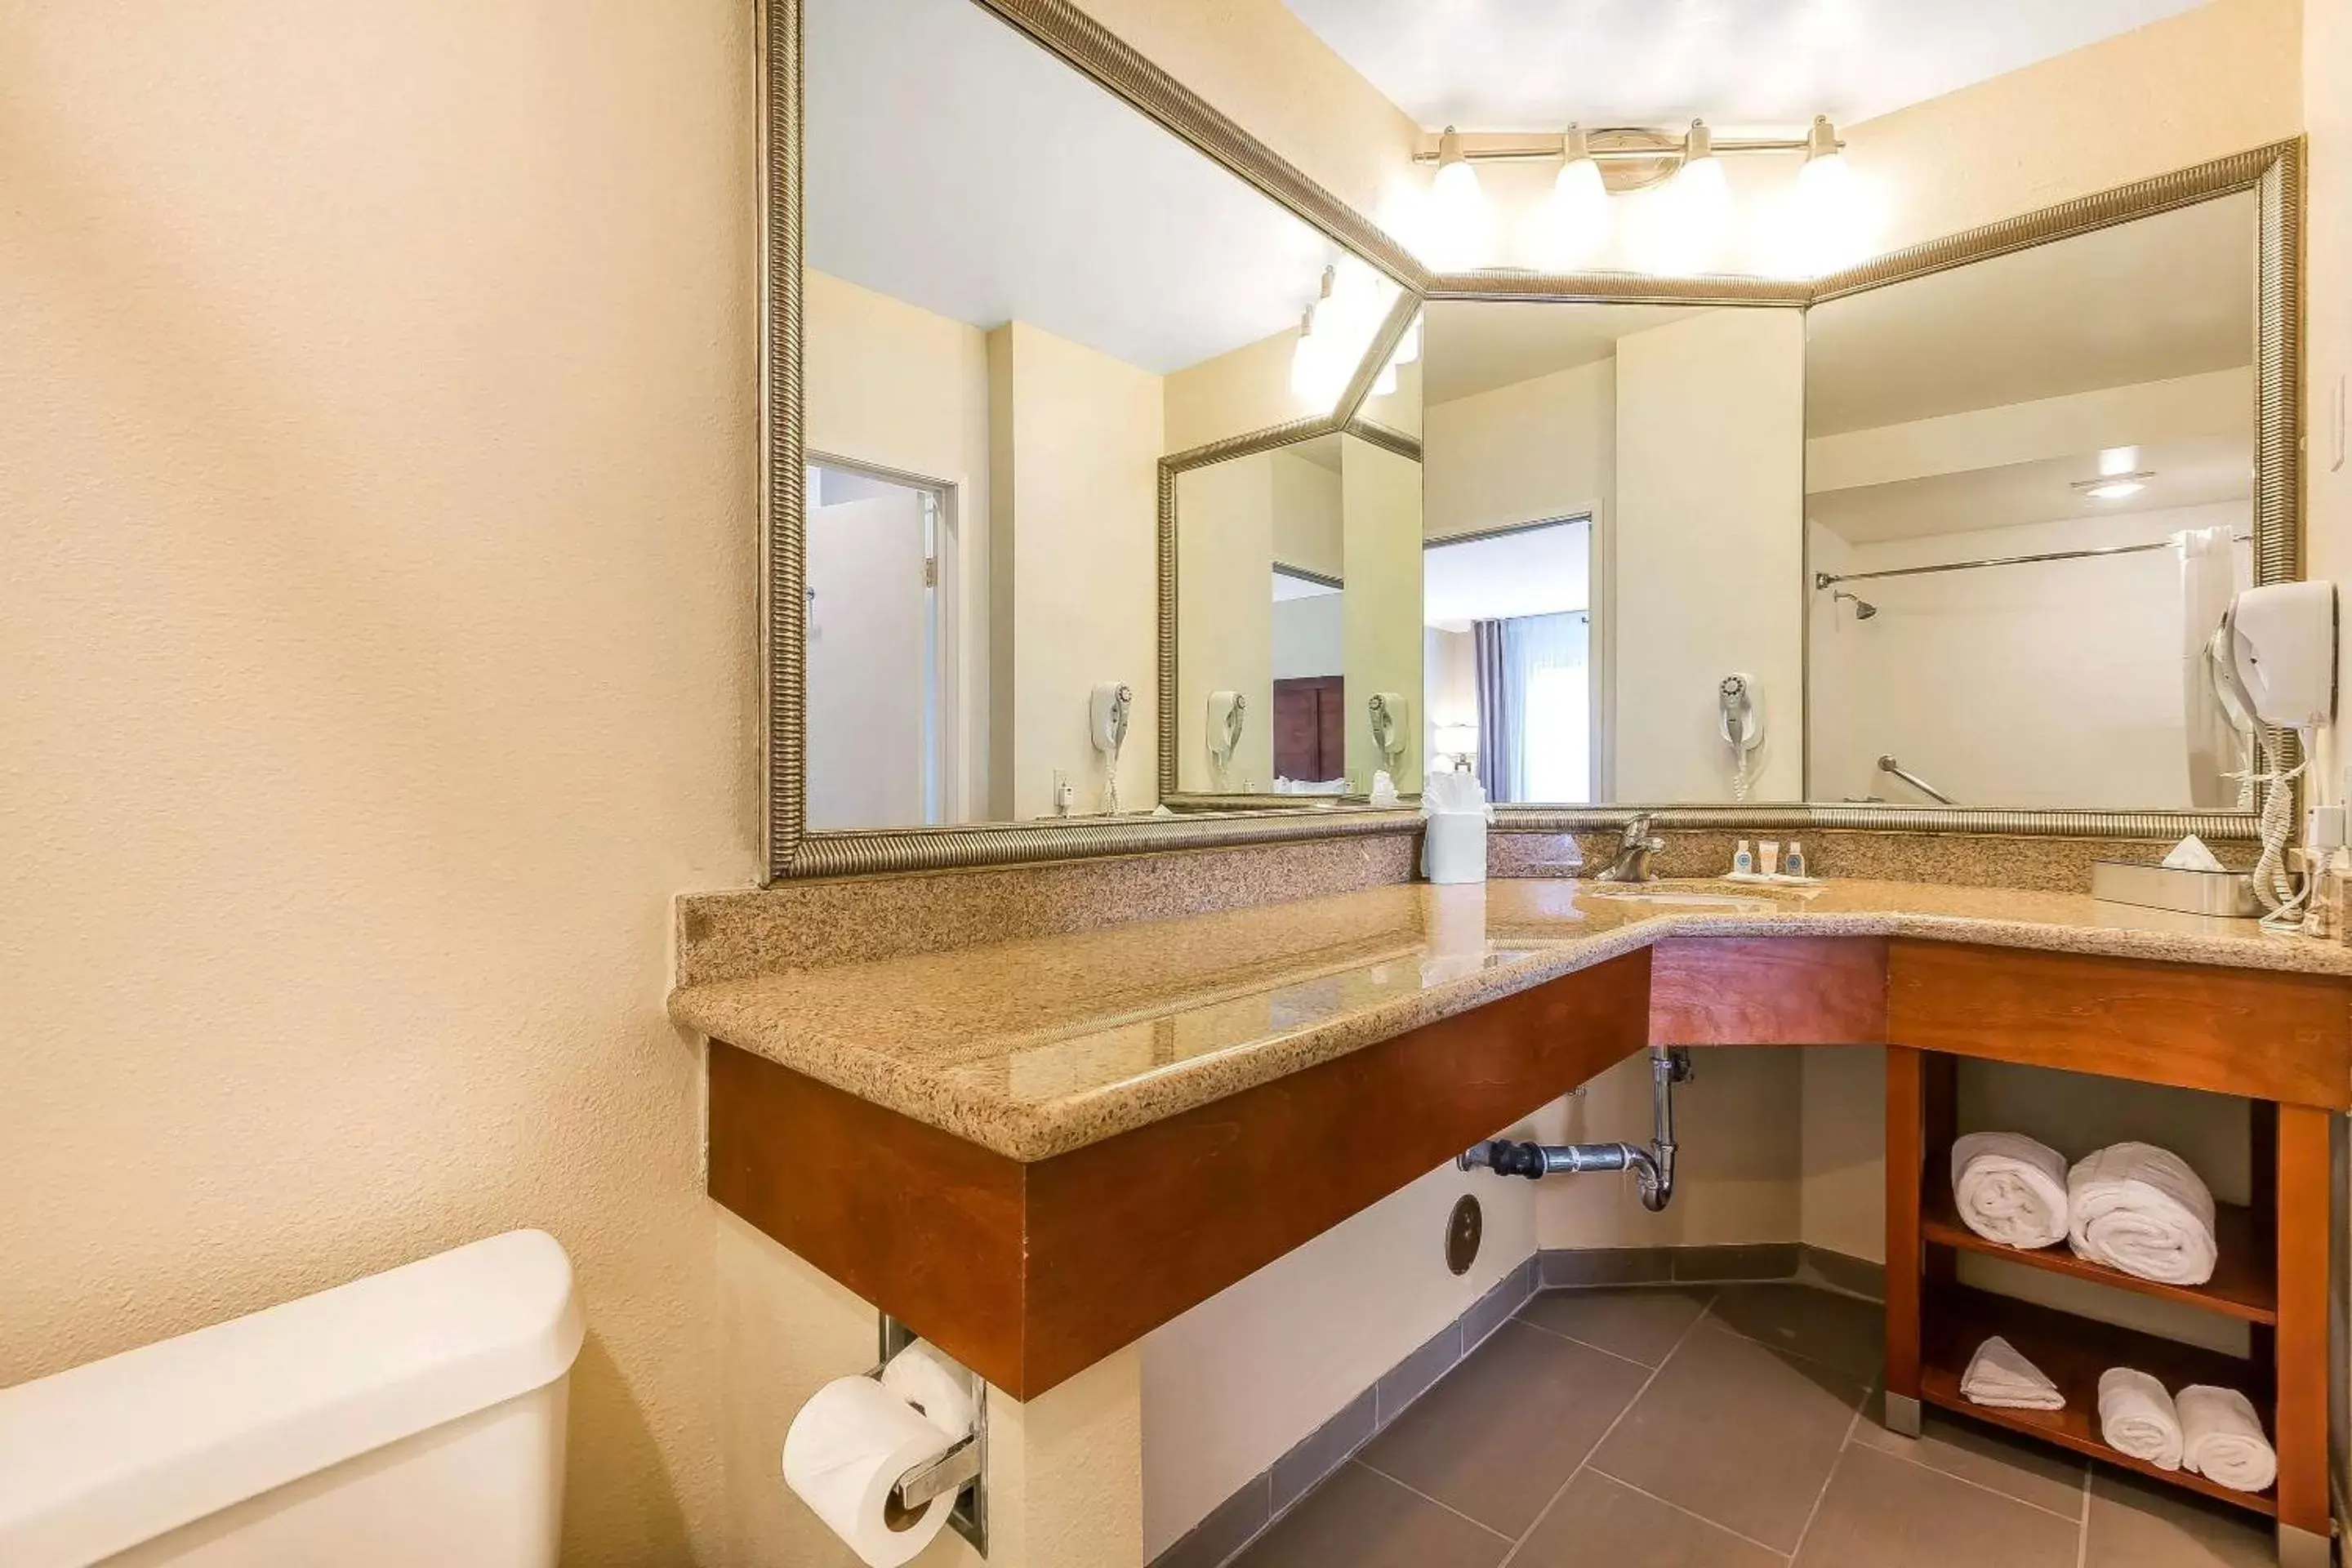 Photo of the whole room, Bathroom in Comfort Inn Santa Monica - West Los Angeles